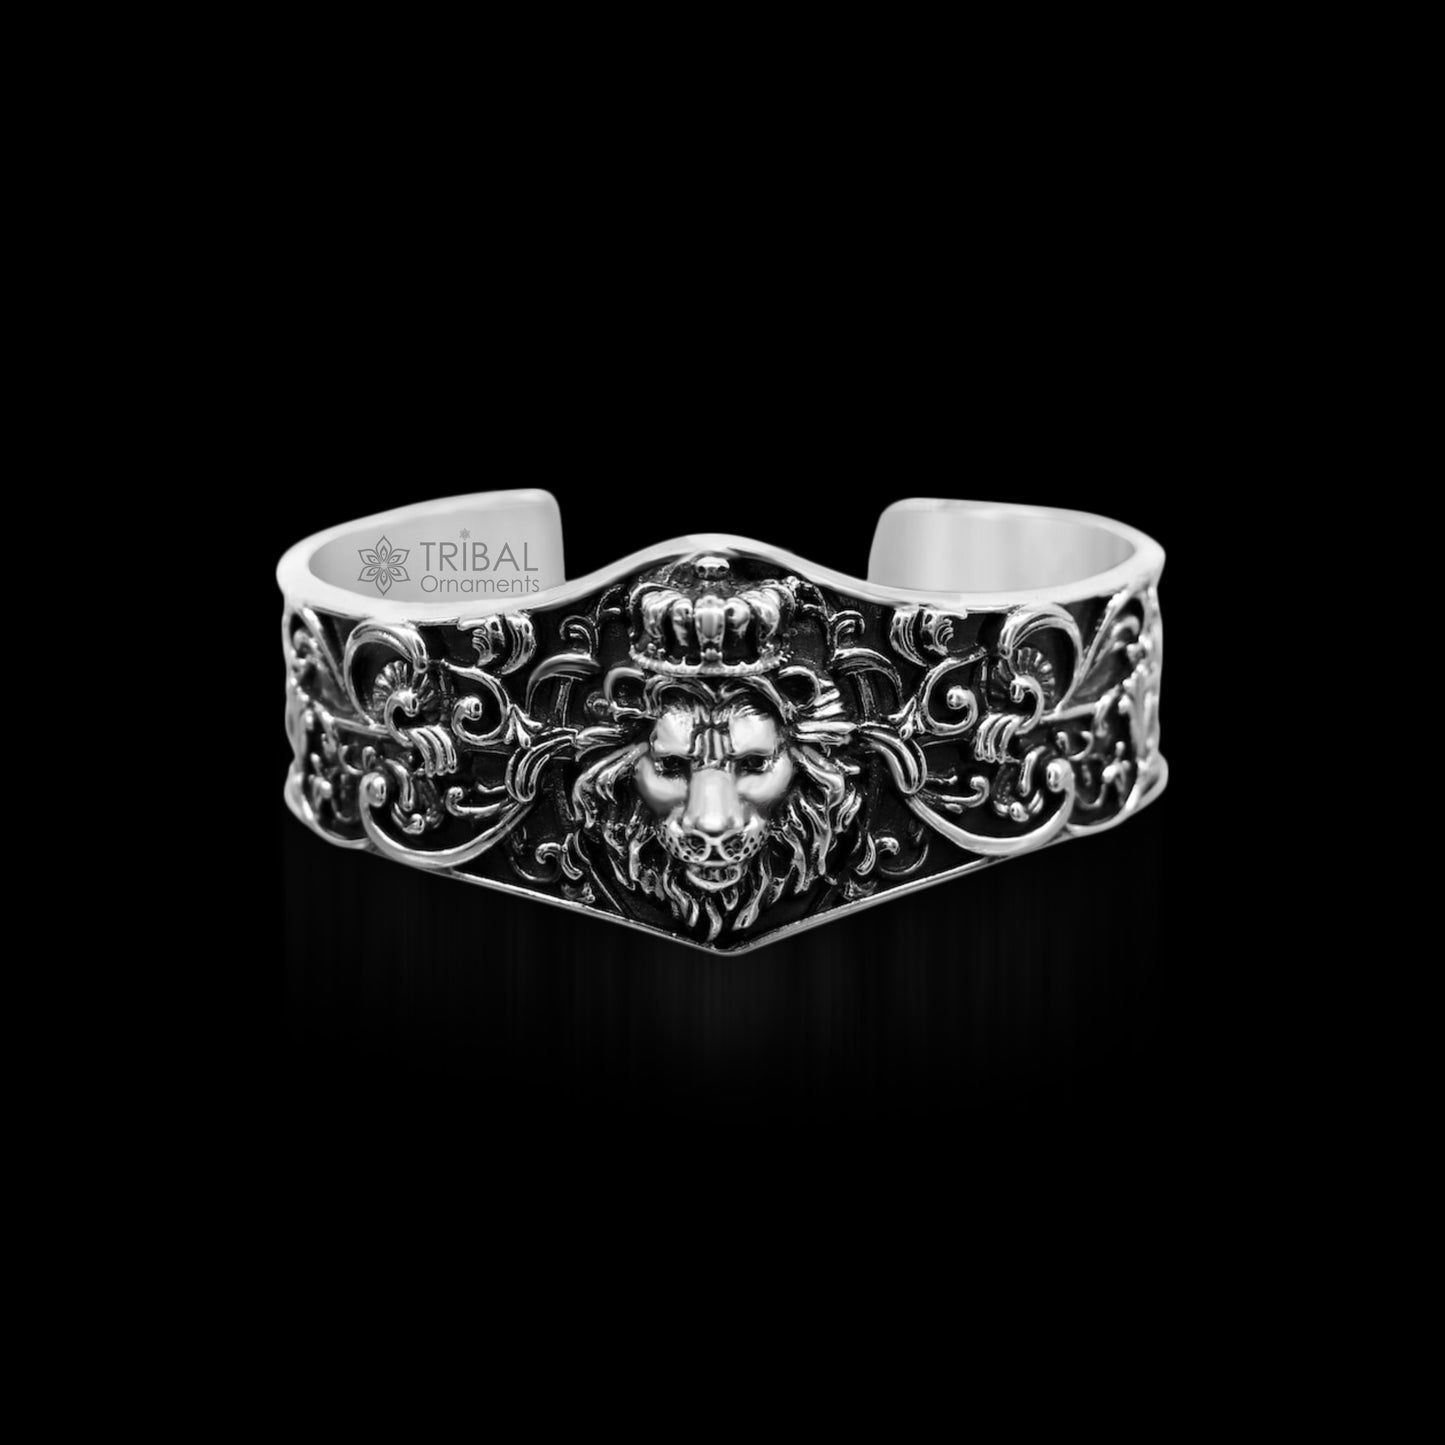 Lion cuff kada 925 sterling silver handmade amazing cuff bracelet Adjustable daily use tribal style jewelry unisex gift cuff99